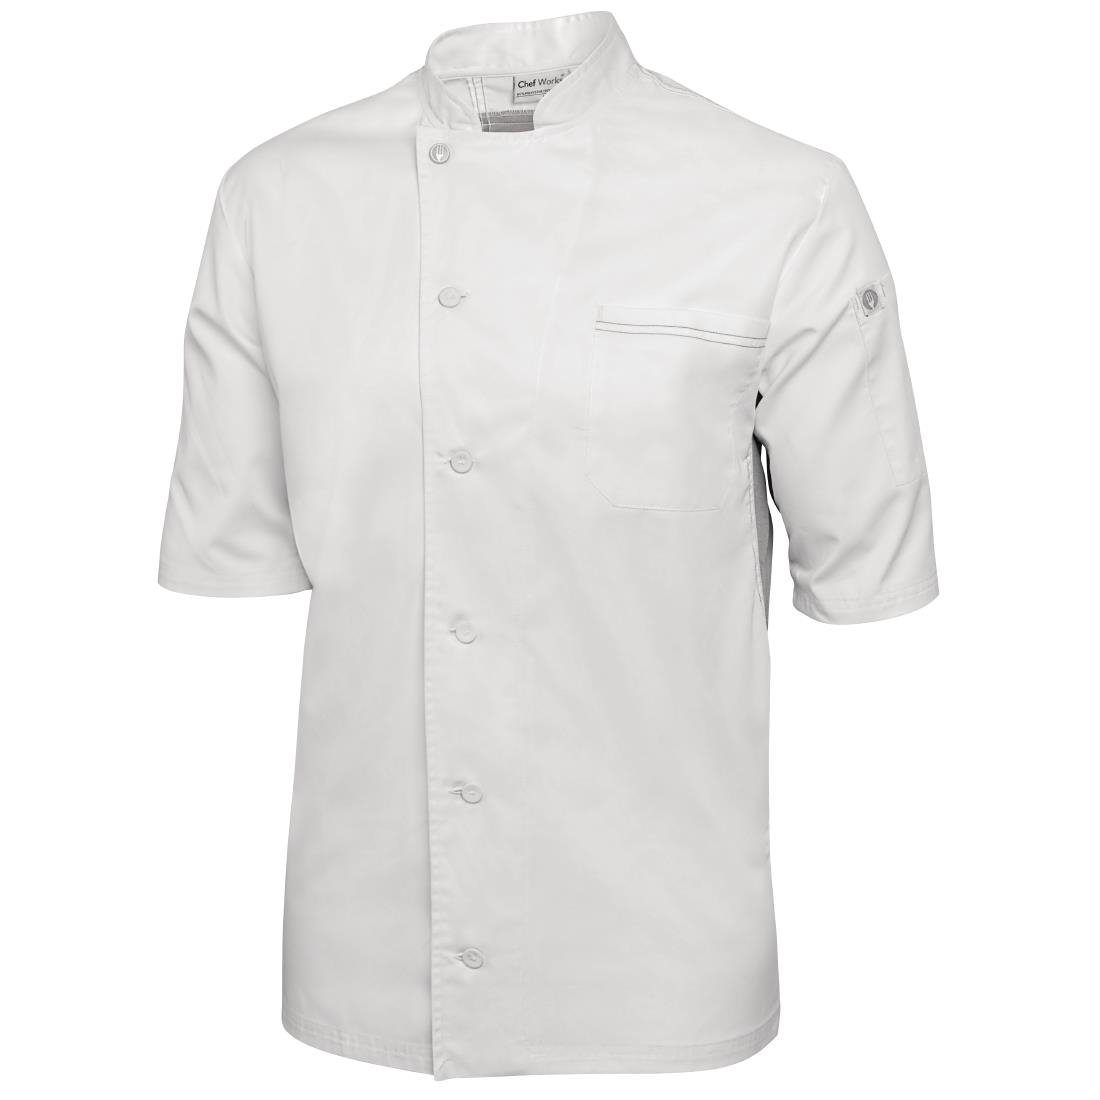 B205-L Chef Works Valais Signature Series Unisex Chefs Jacket White L